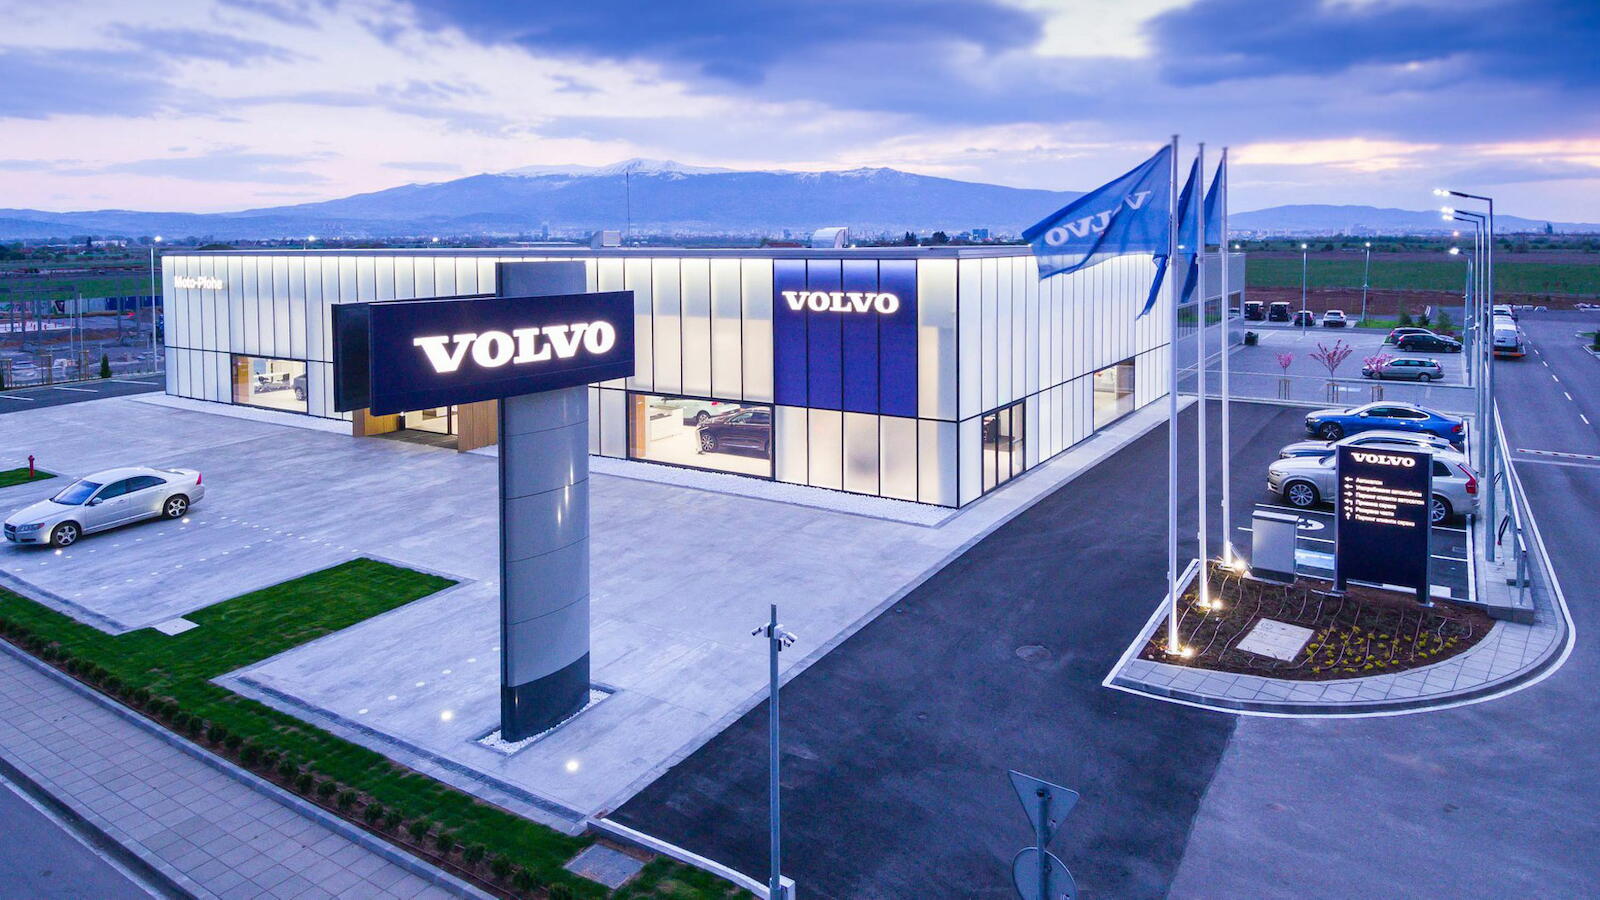 Volvo - Moto Pfohe, Sofia - Bulgaria